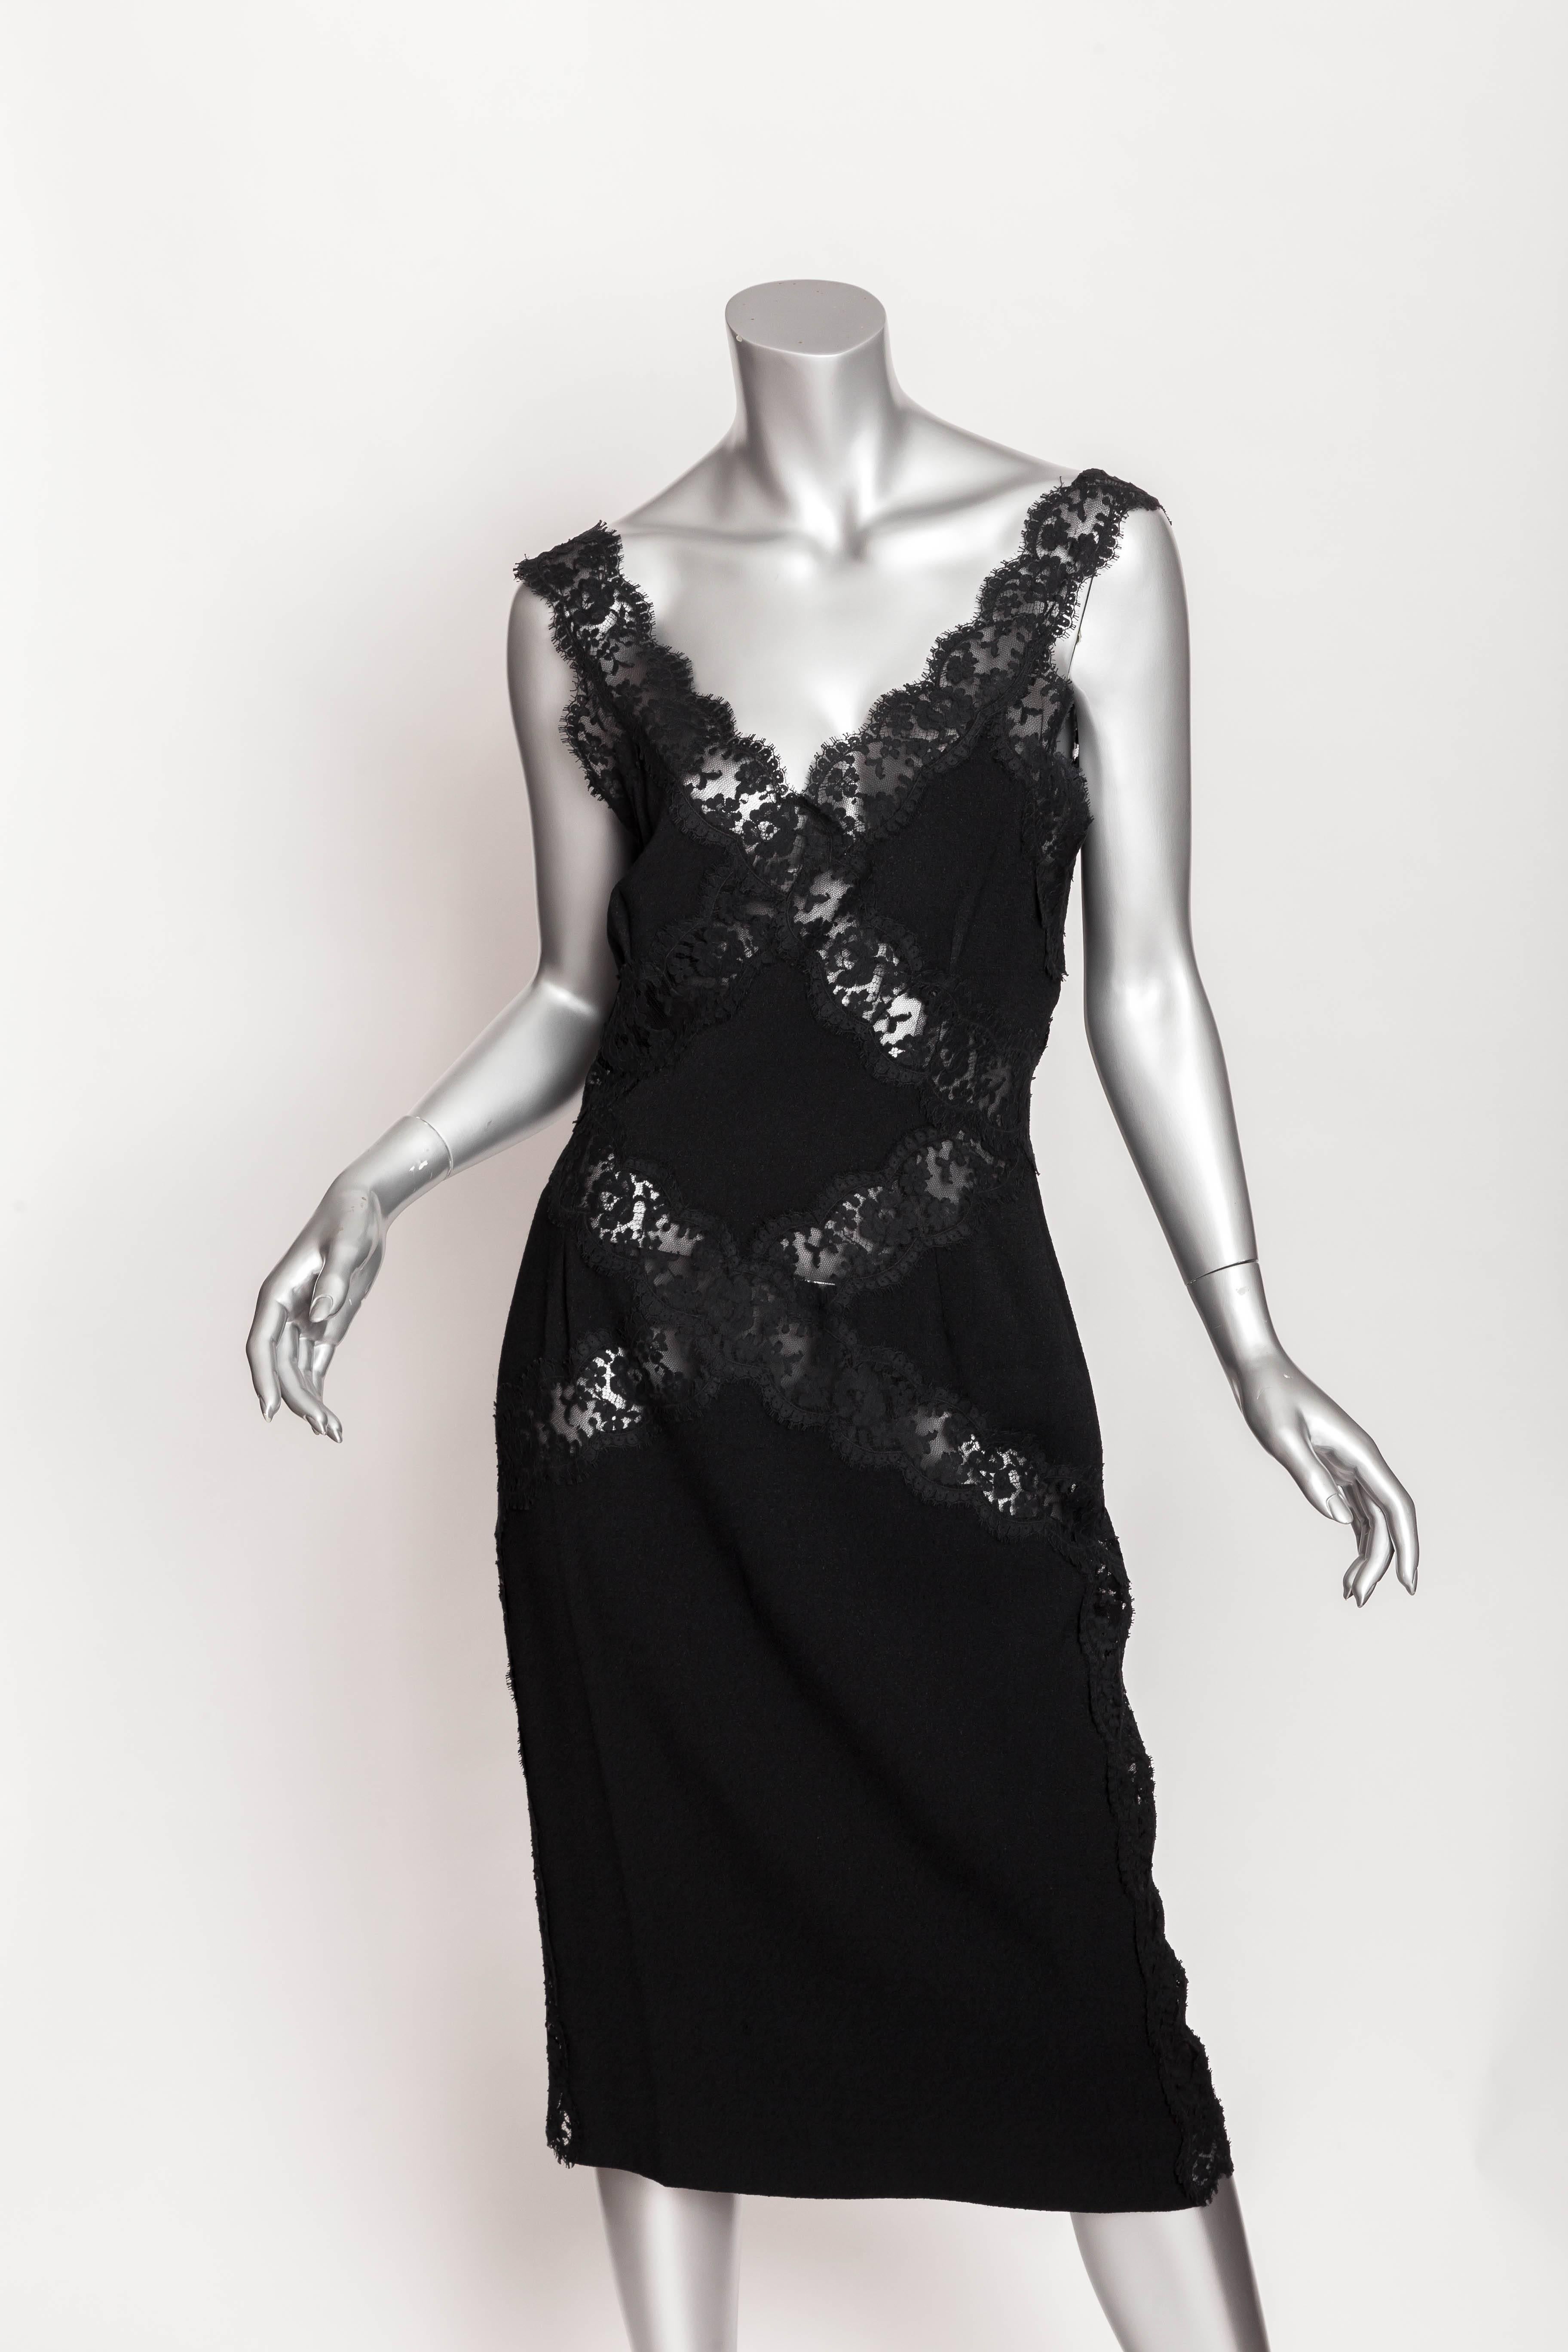 Dolce & Gabbana Black Lace Dress - 46 1